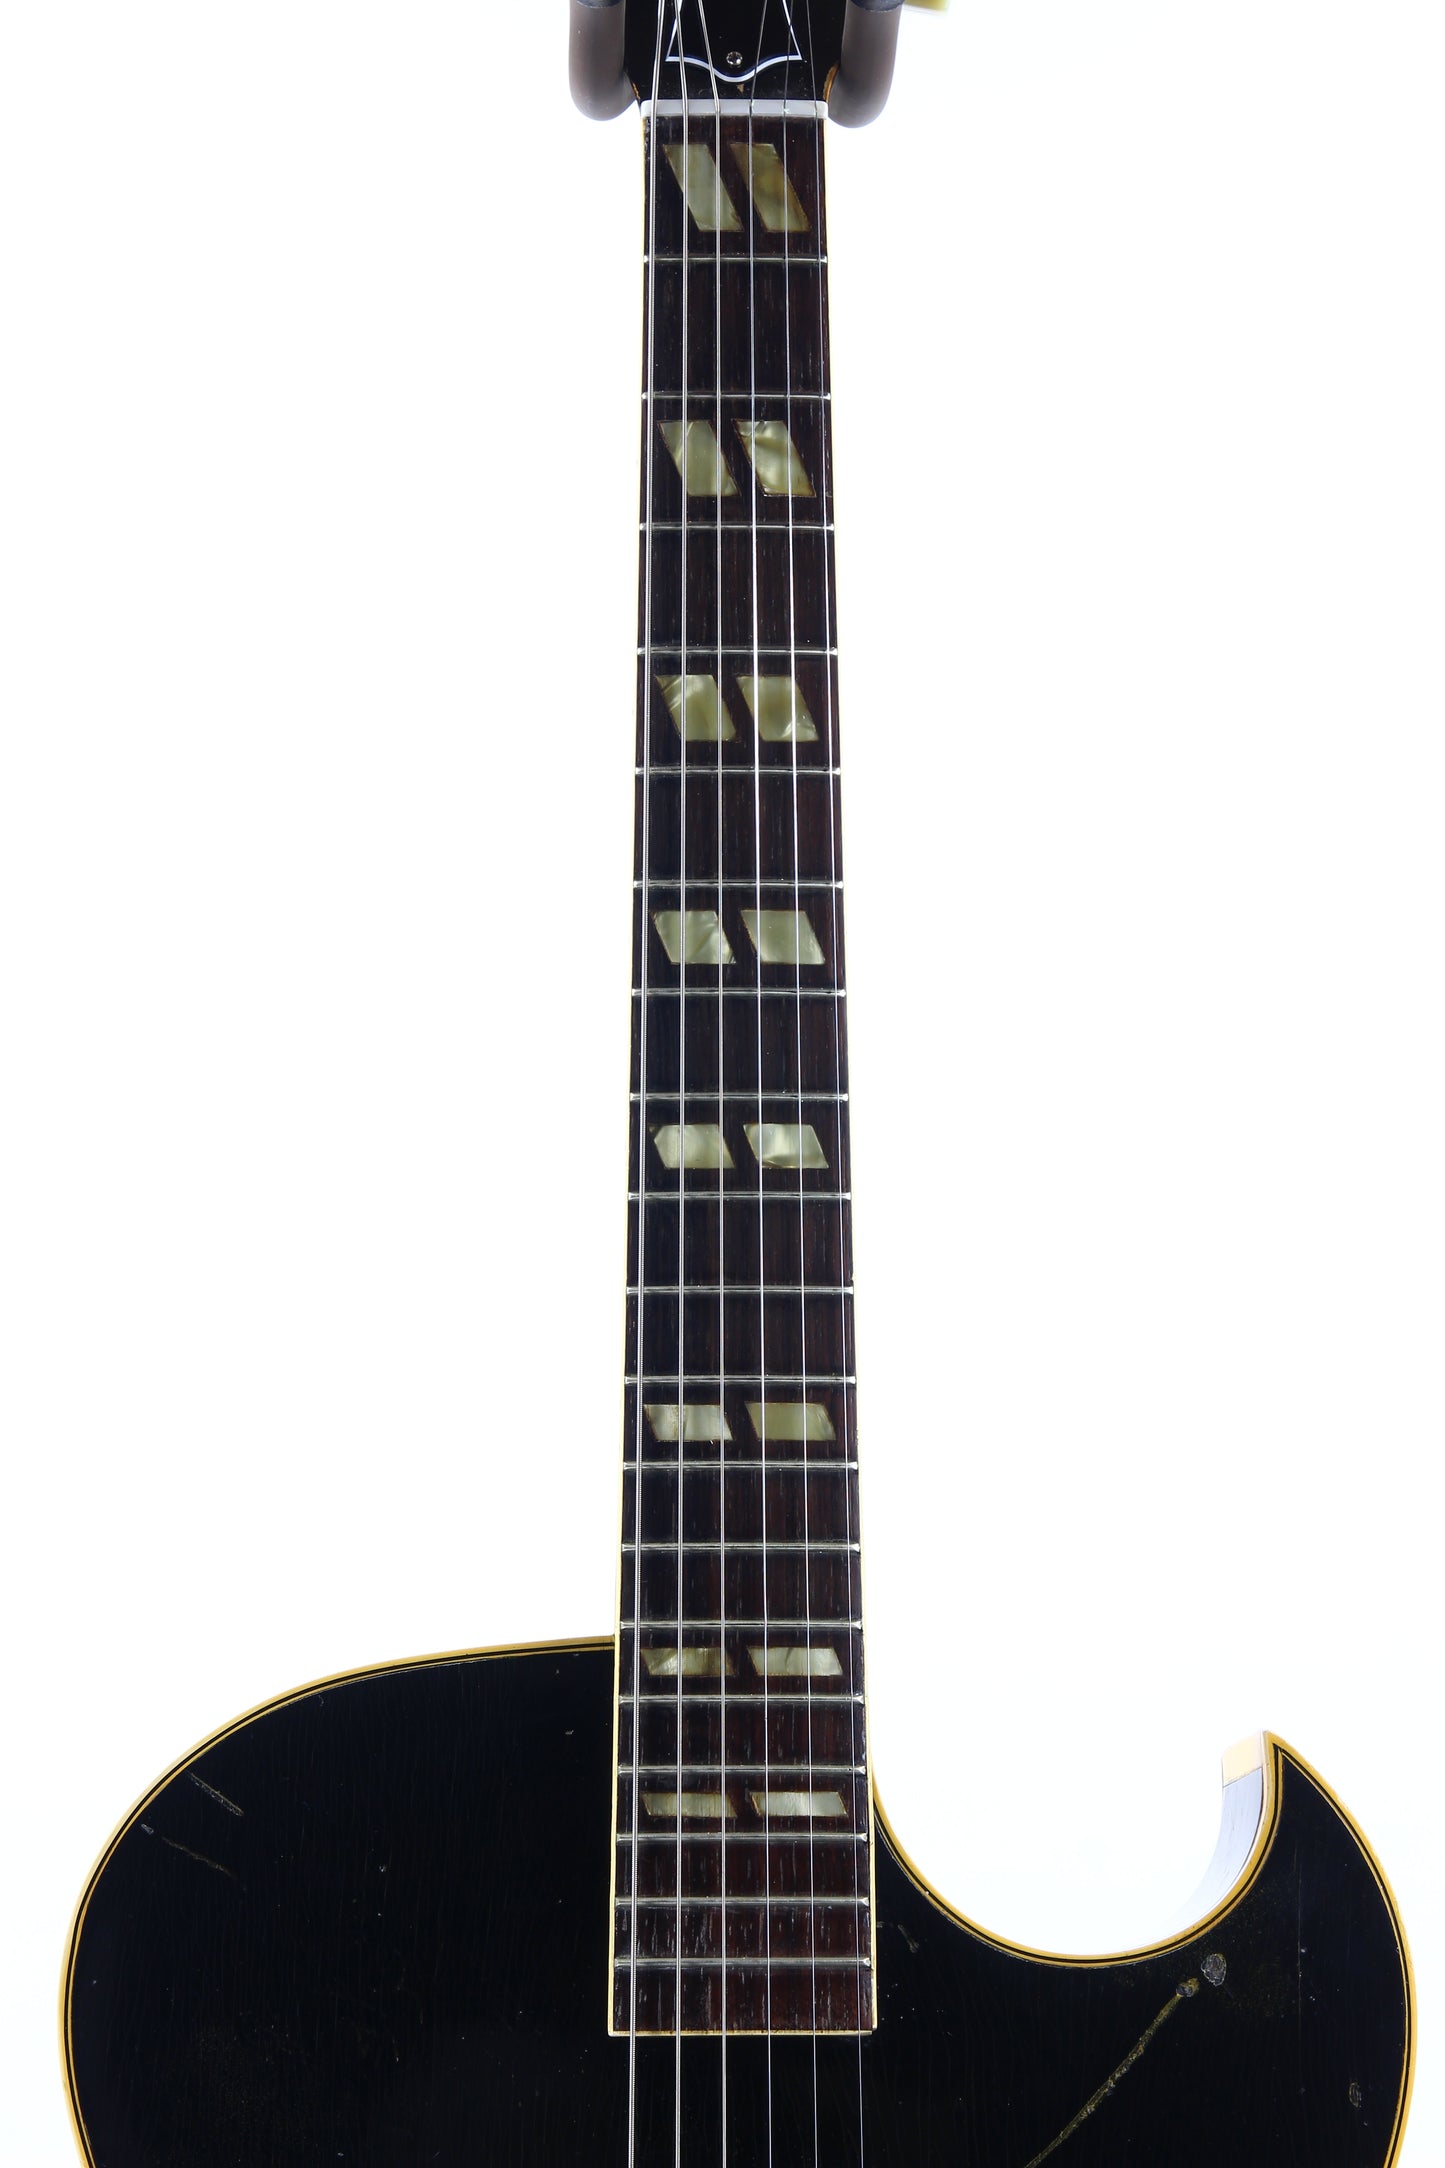 1953 Gibson ES-175 Sunburst Single P90 Pickup - 1950's Player Jazz Archtop Guitar!